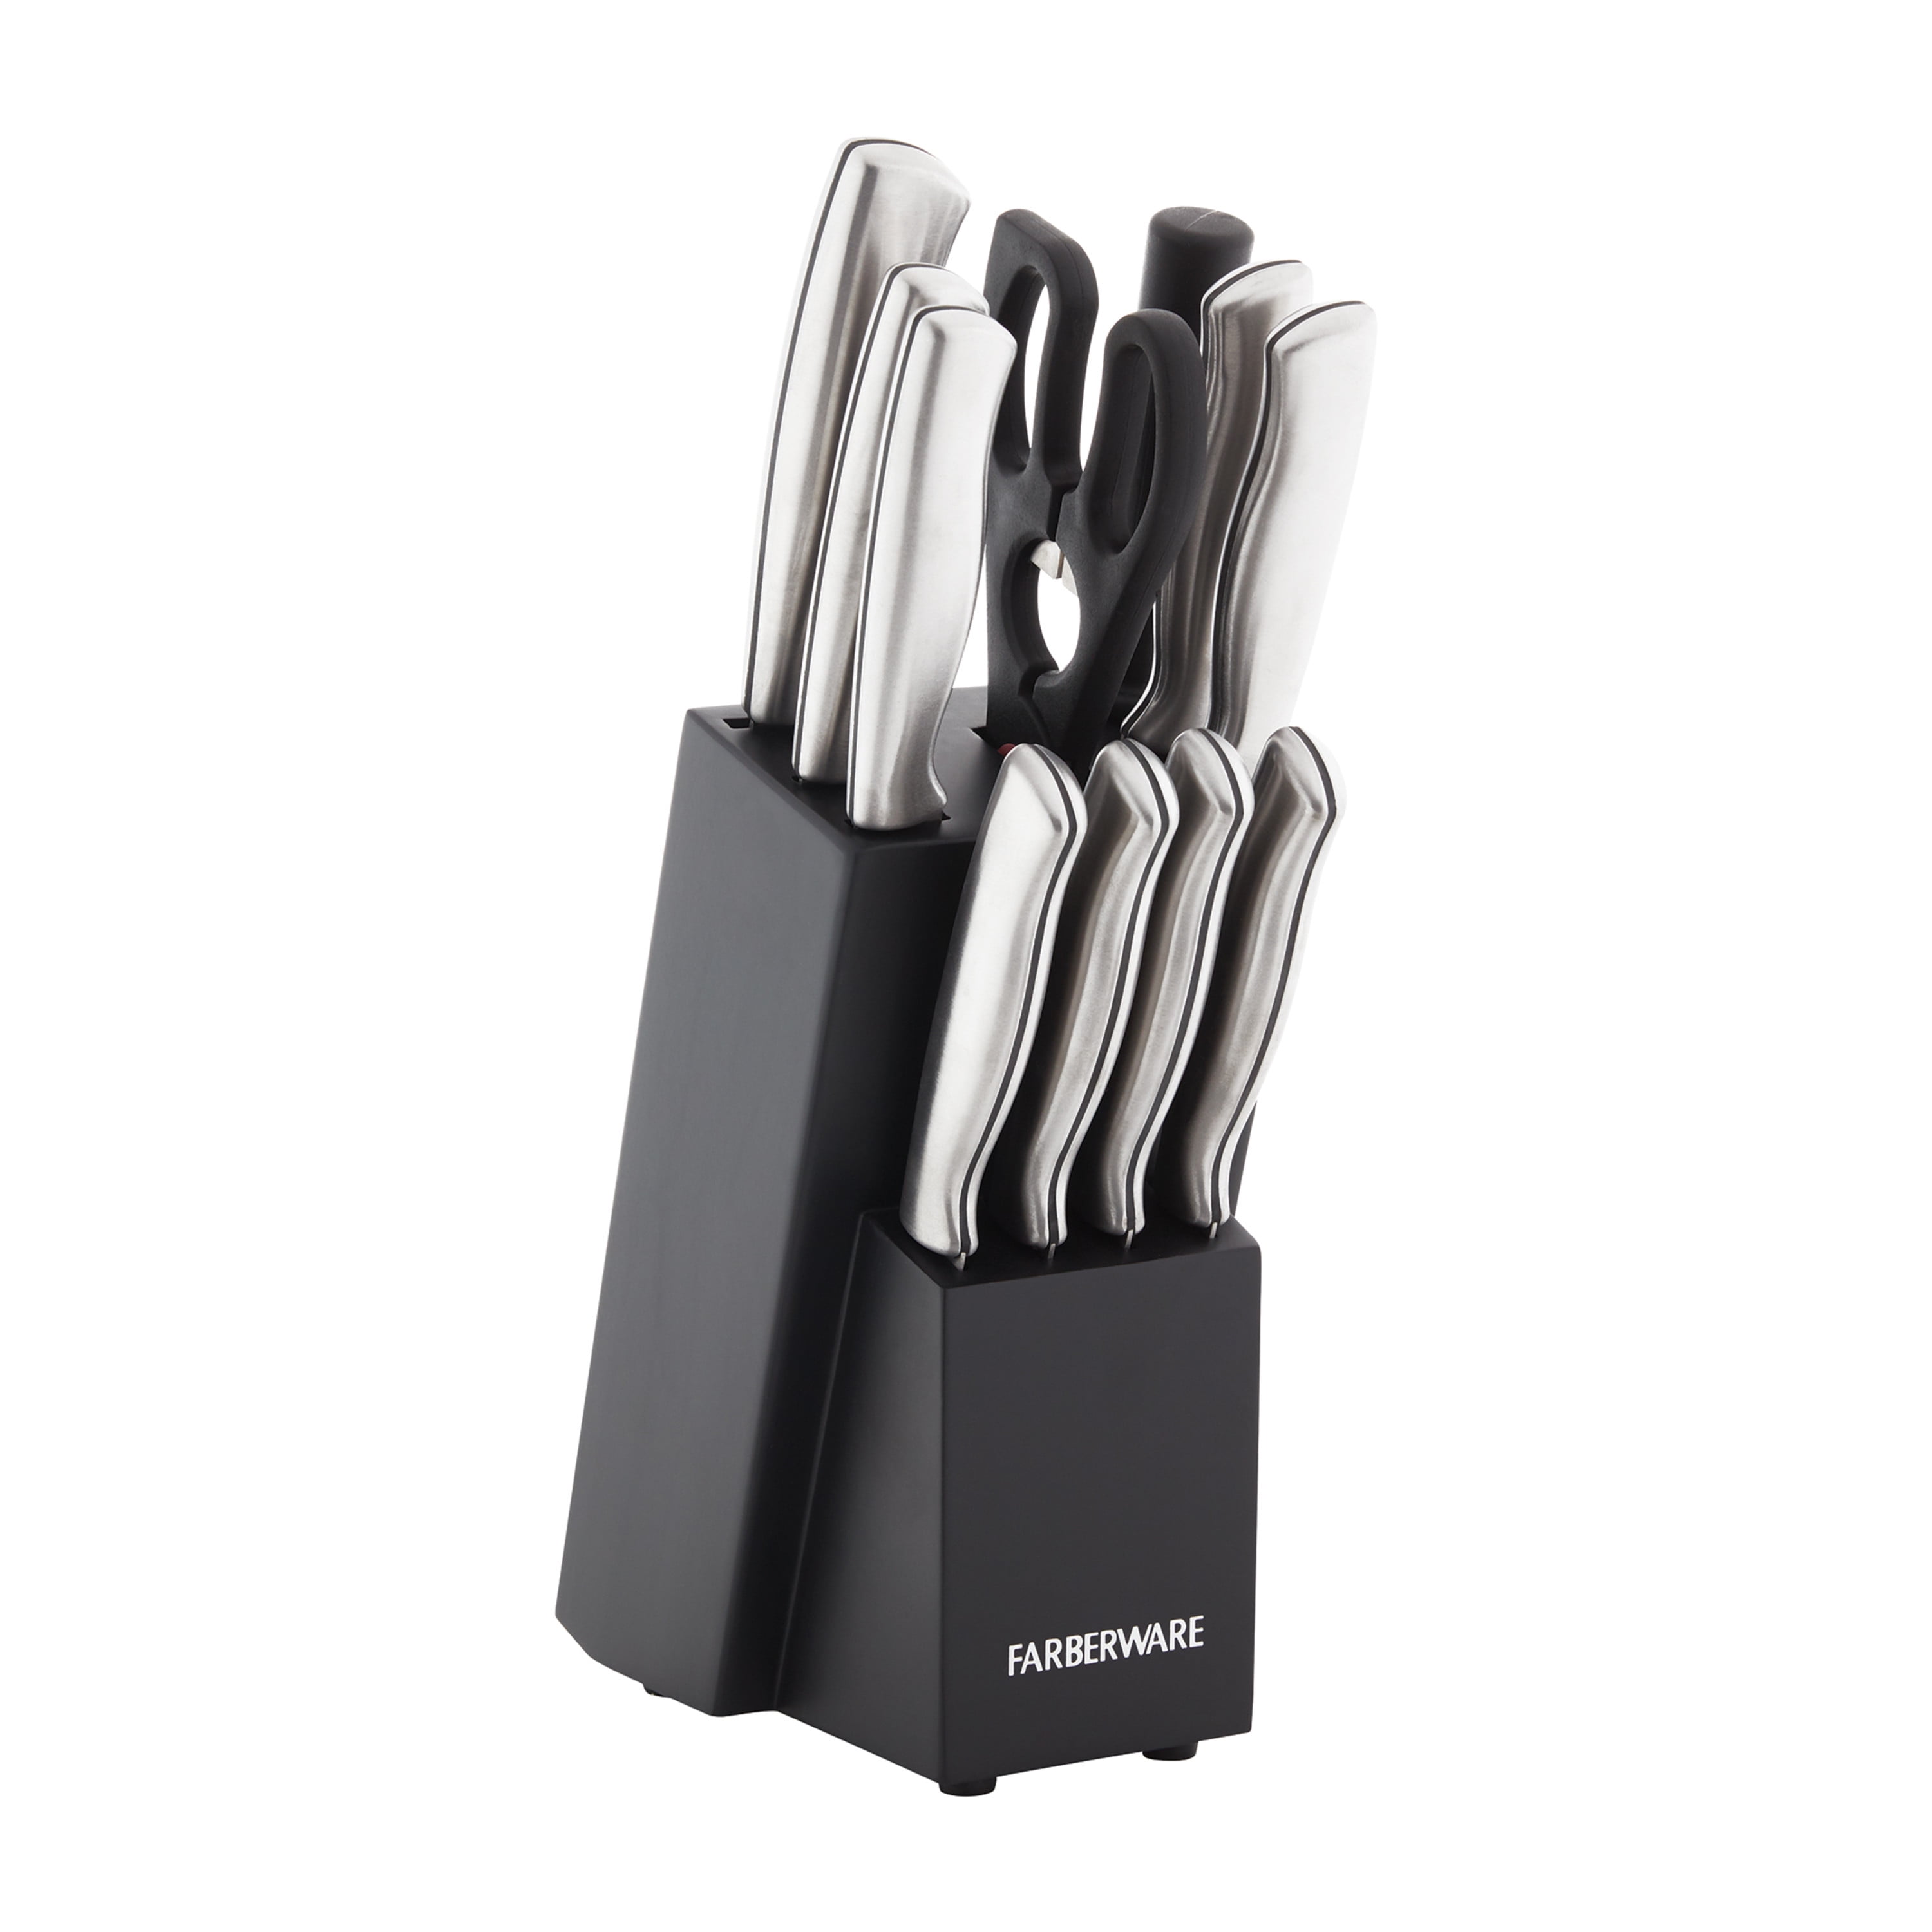  Farberware - 5272030 Farberware Resin Cutlery Set